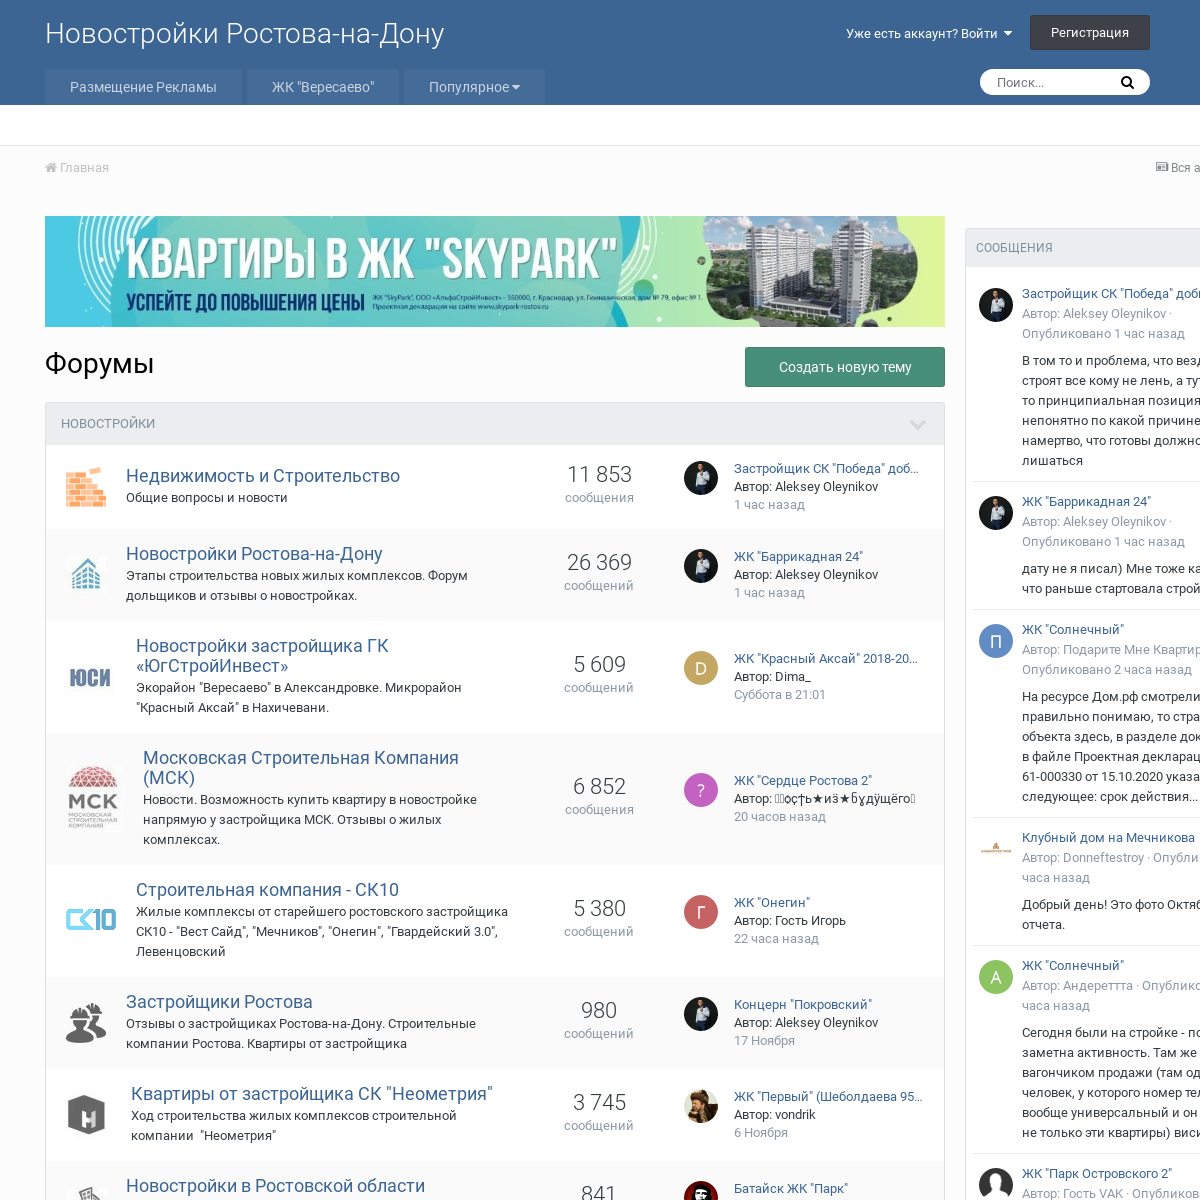 A complete backup of forumrostov.ru